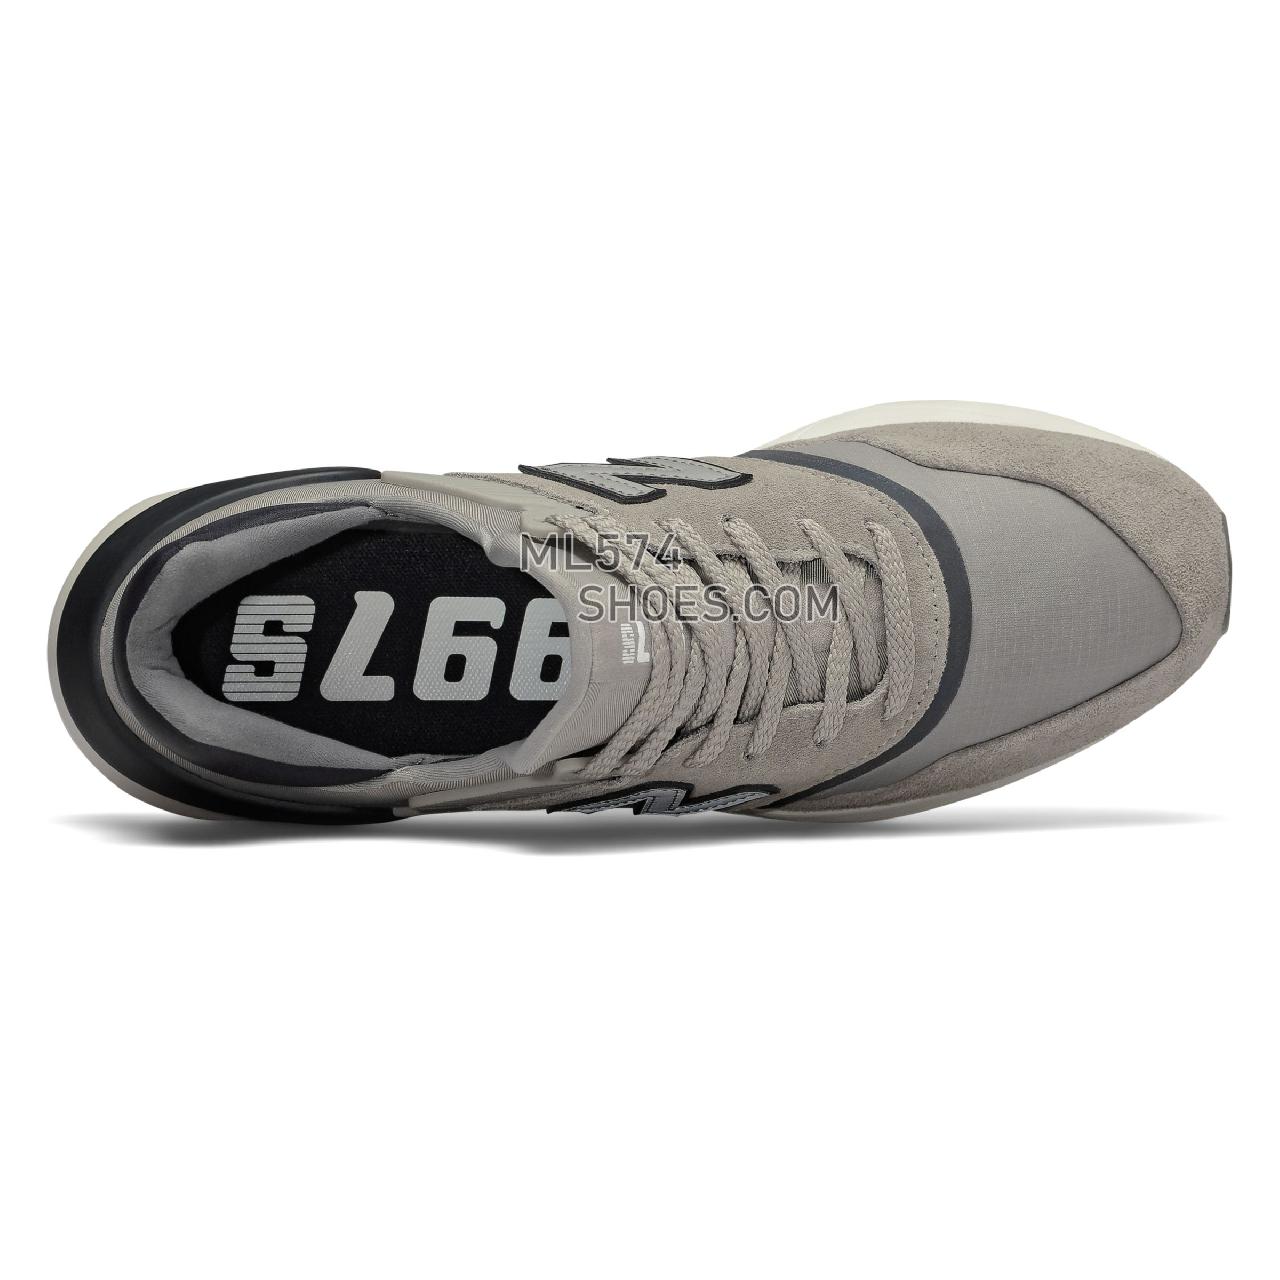 New Balance 997 Sport - Men's 997 Sport Classic MS997V1-27474-M - Grey with Black - MS997MA